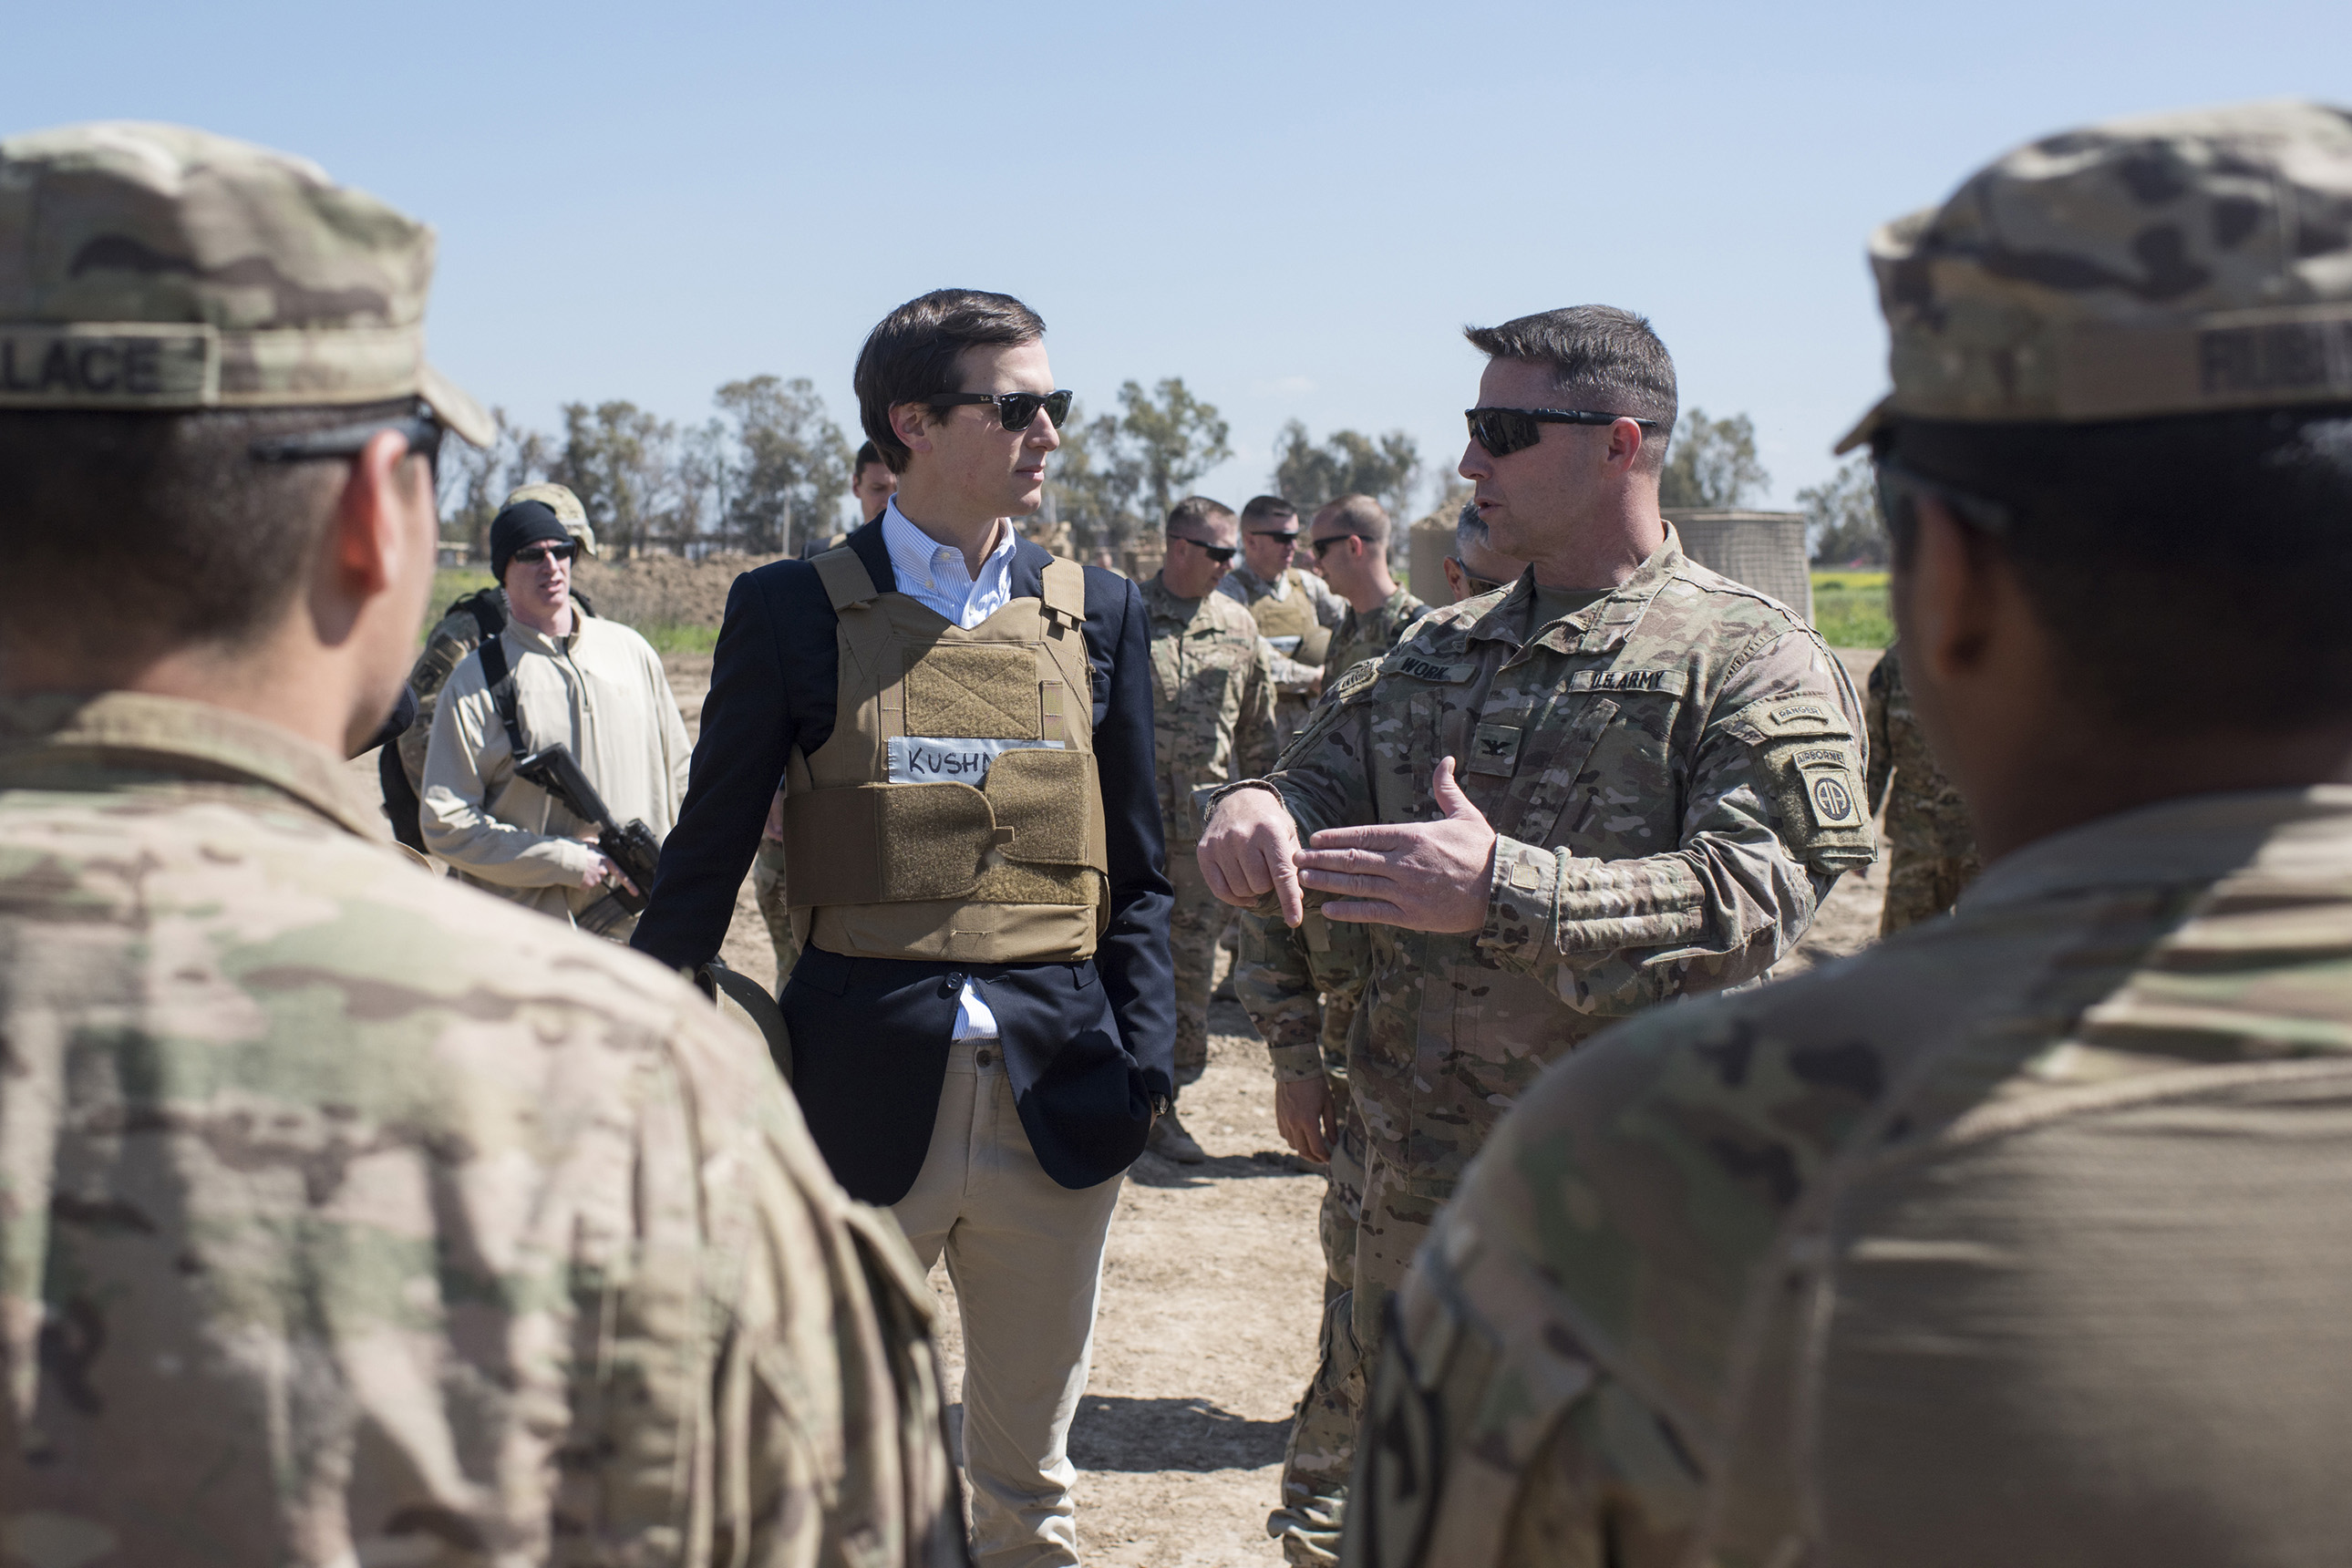 Jared Kushner, Senior Advisor to President Donald J. Trump, meets with service members at a forward operating base near Qayyarah West in Iraq, April 4, 2017.